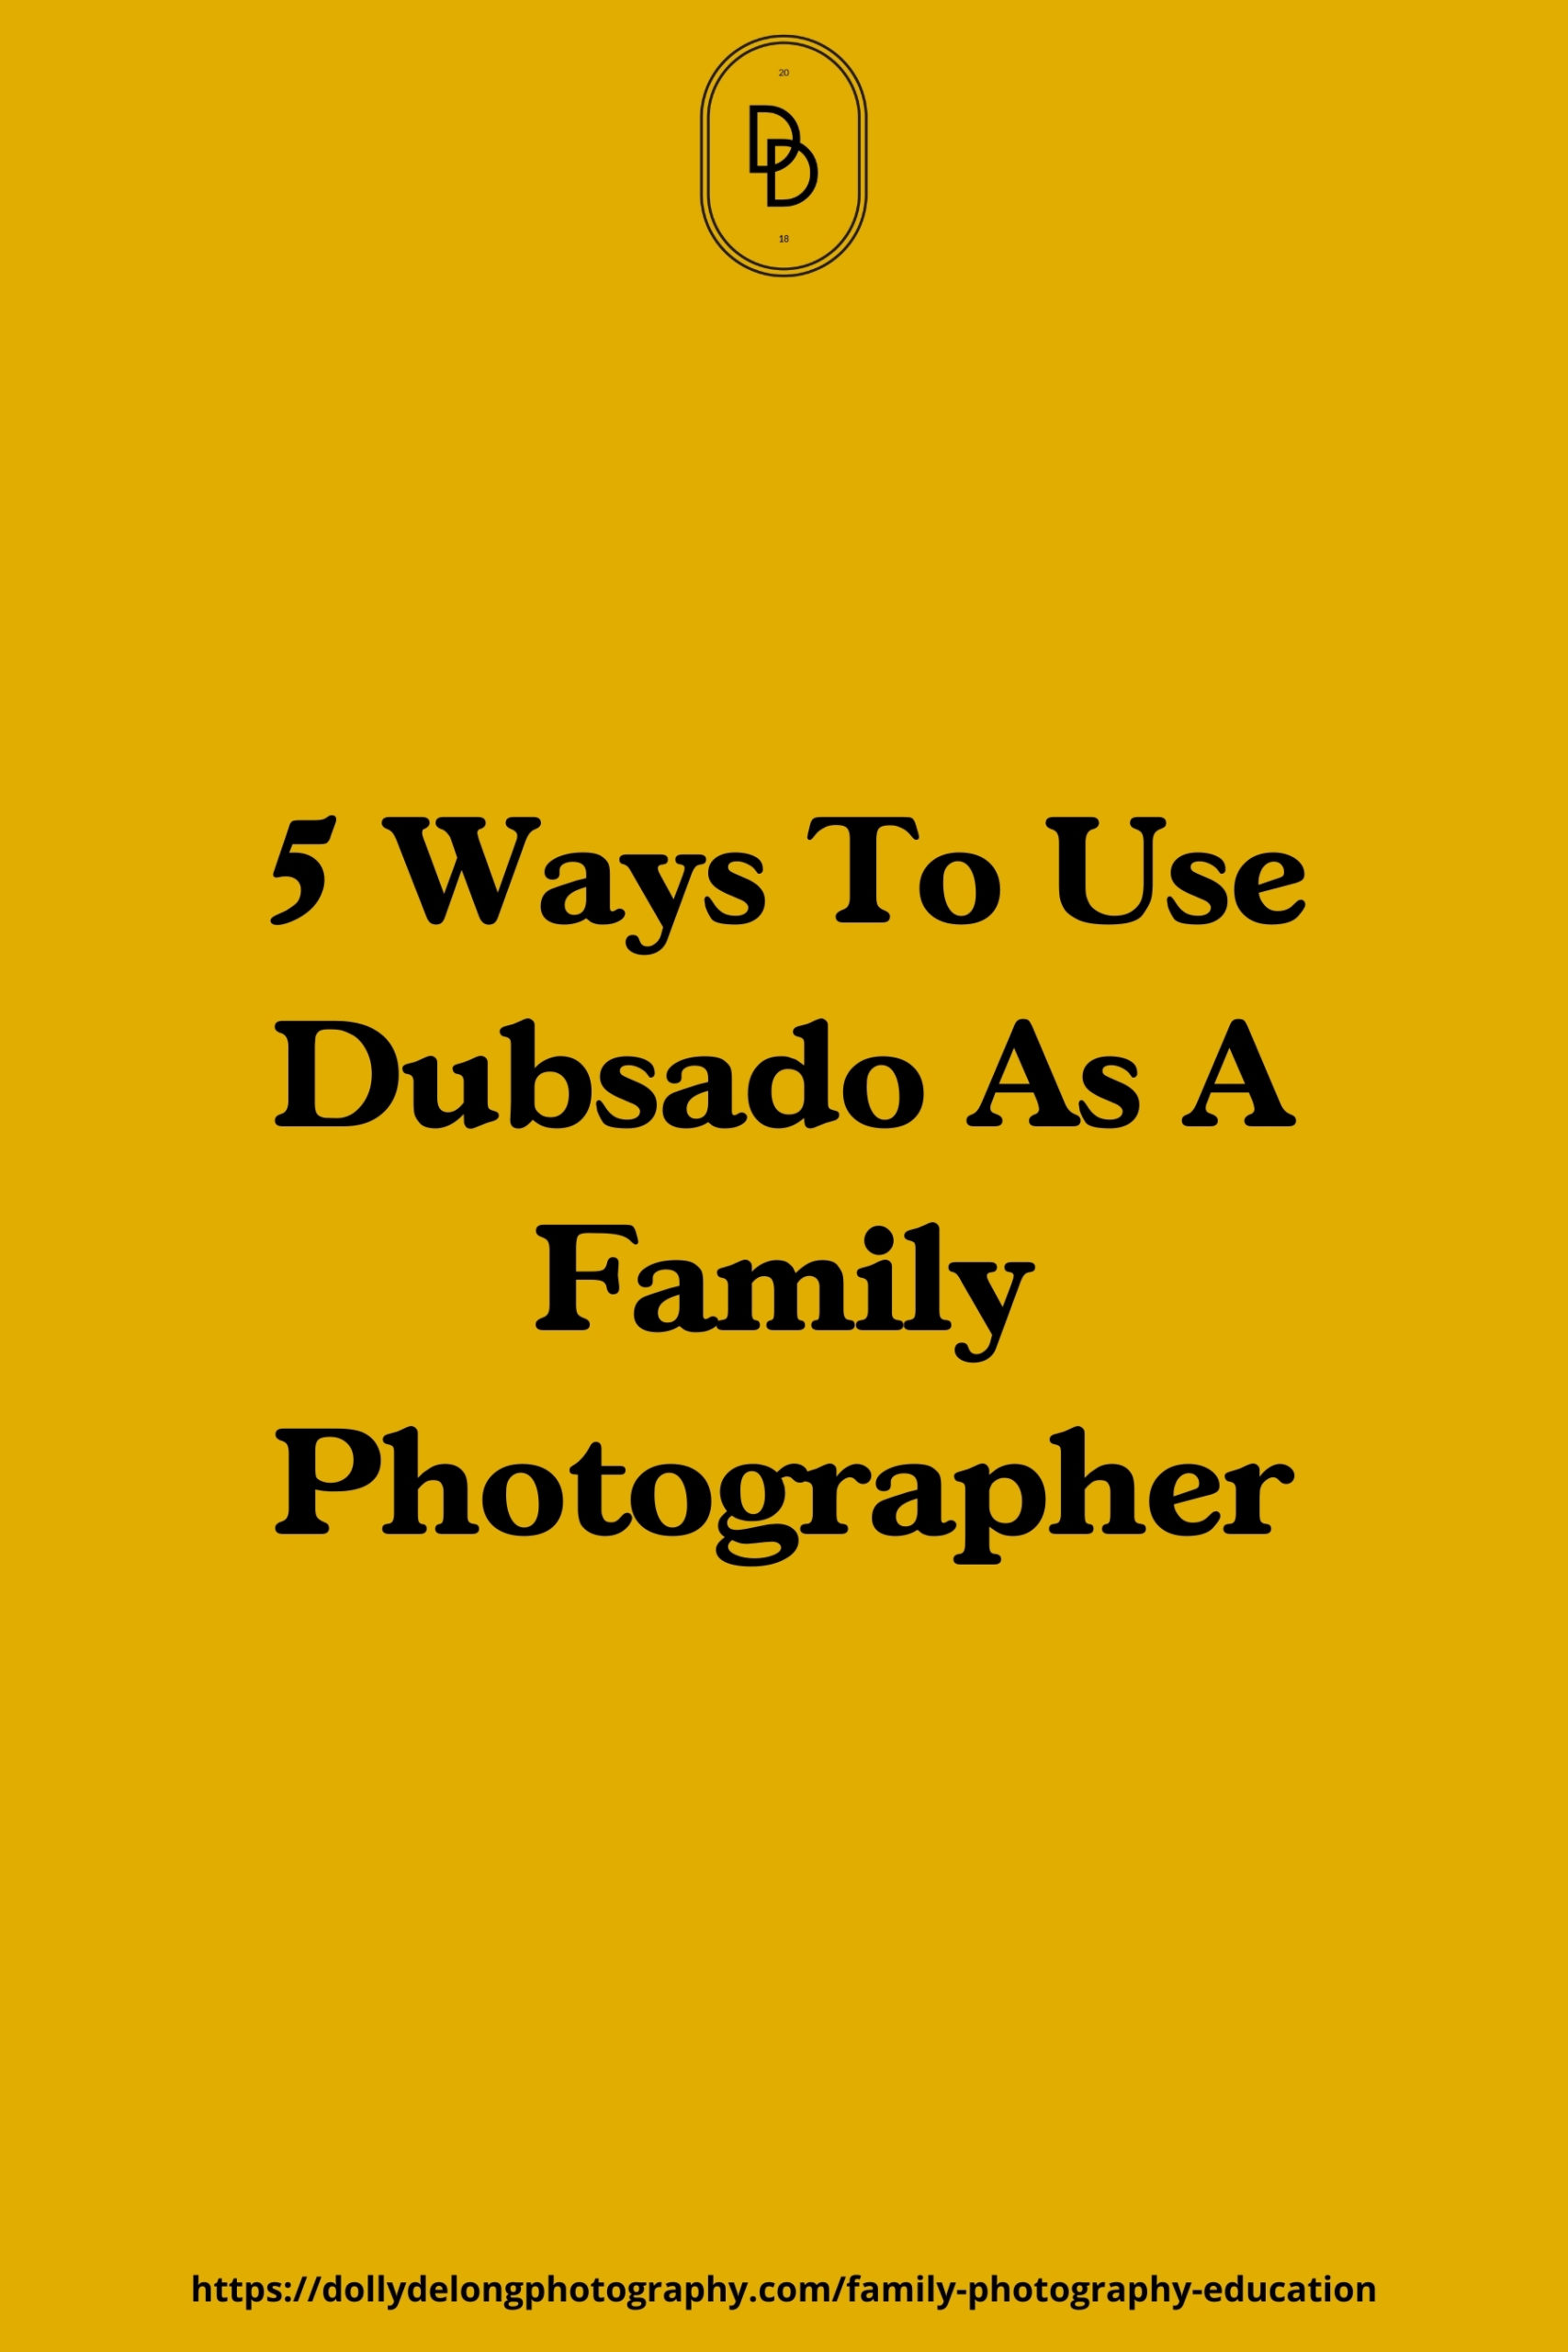 5 ways to use Dubsado as a family photographer